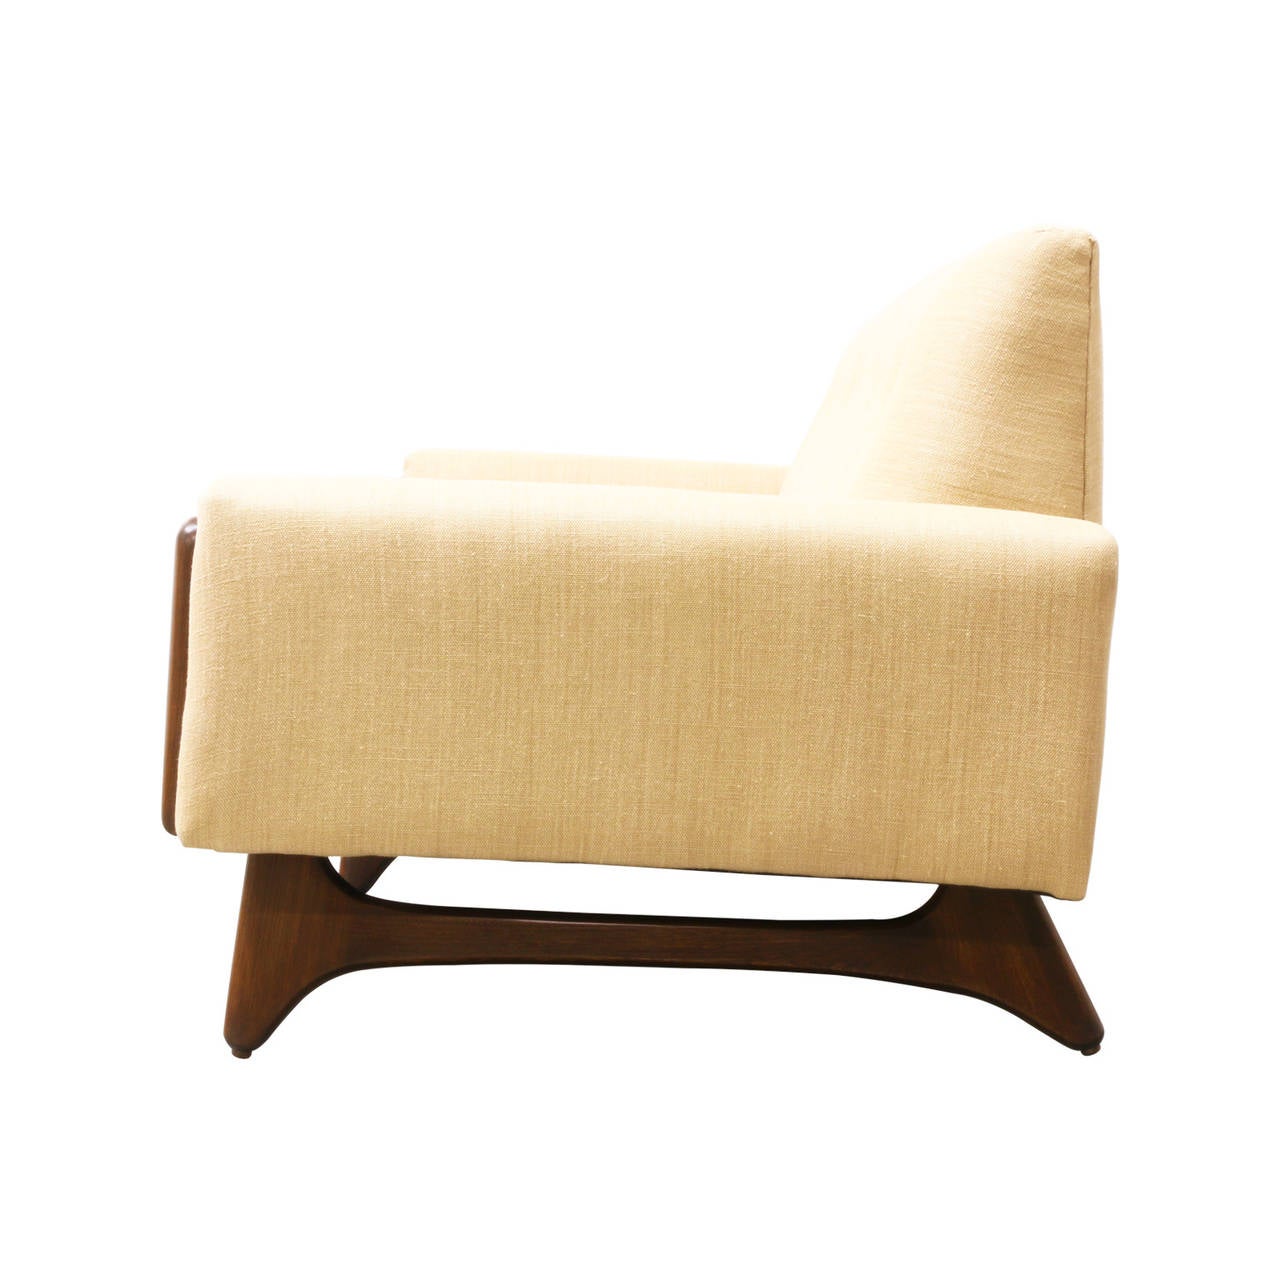 American Adrian Pearsall Sofa by Craft Associates